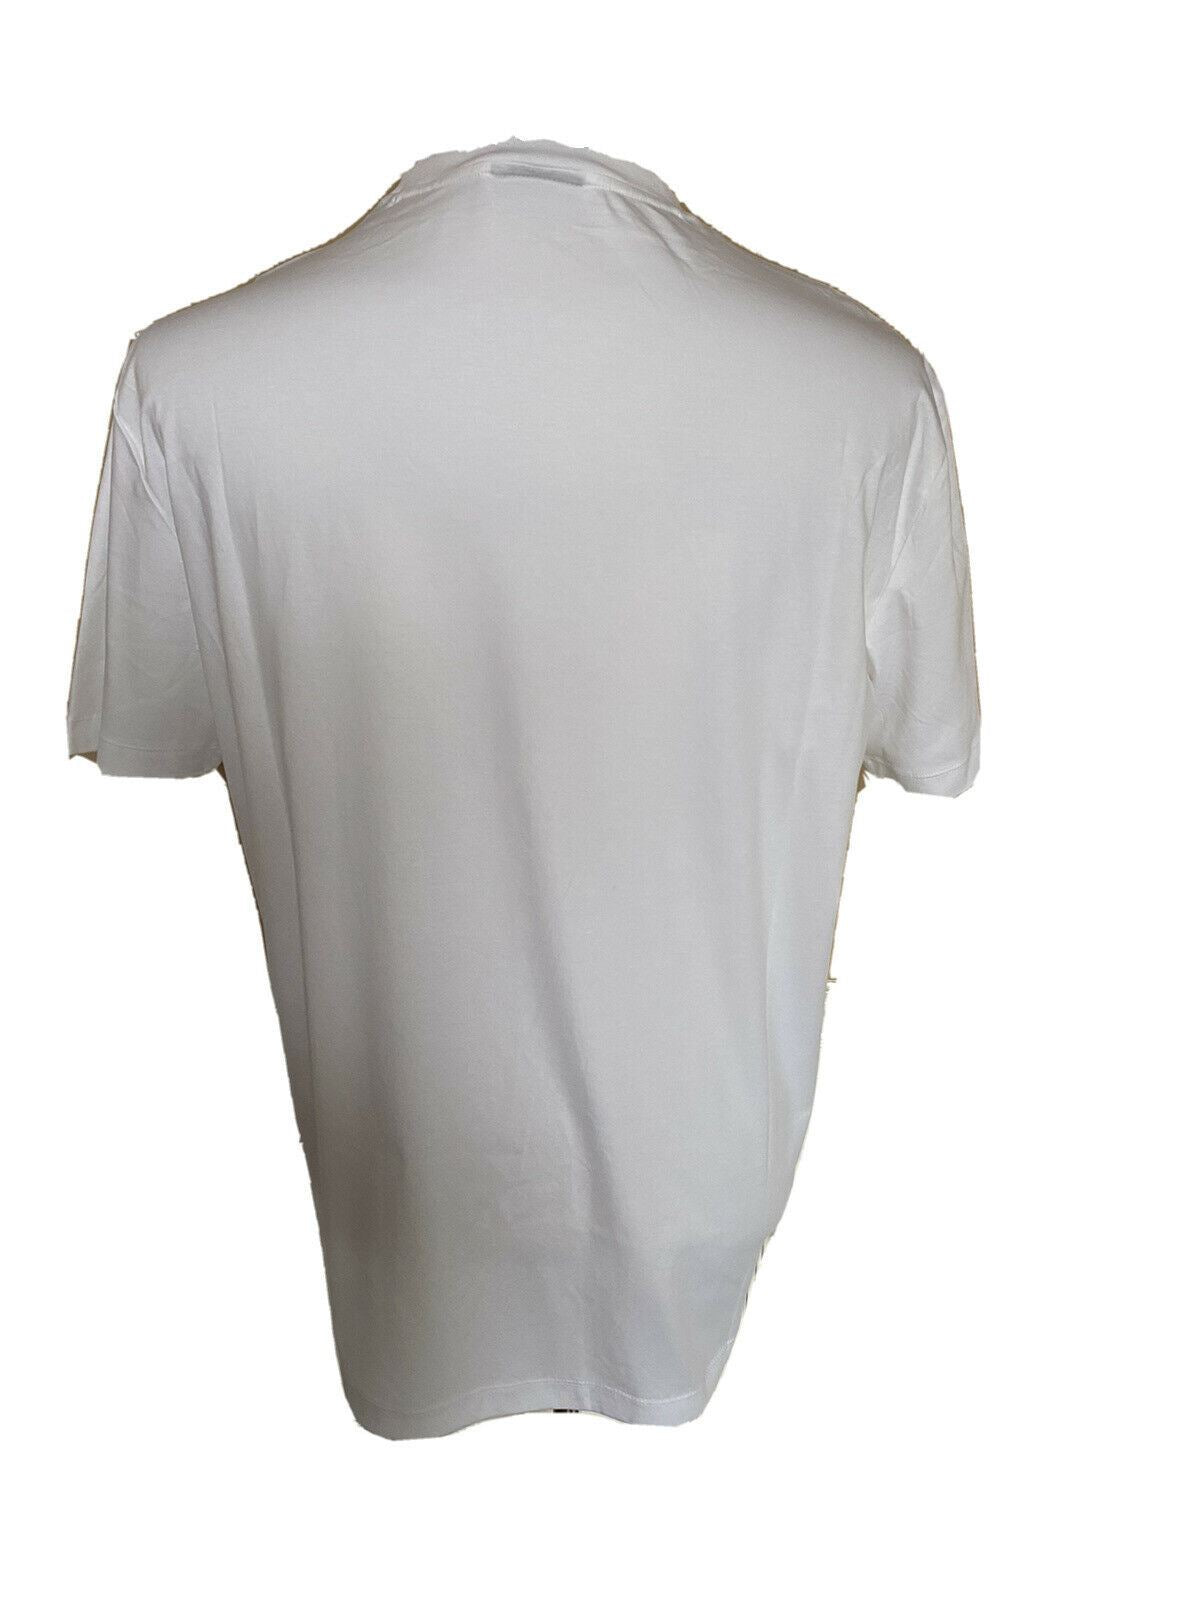 NWT $225 Emporio Armani Белая футболка с коротким рукавом и рисунком орла 3XL 3G1T70